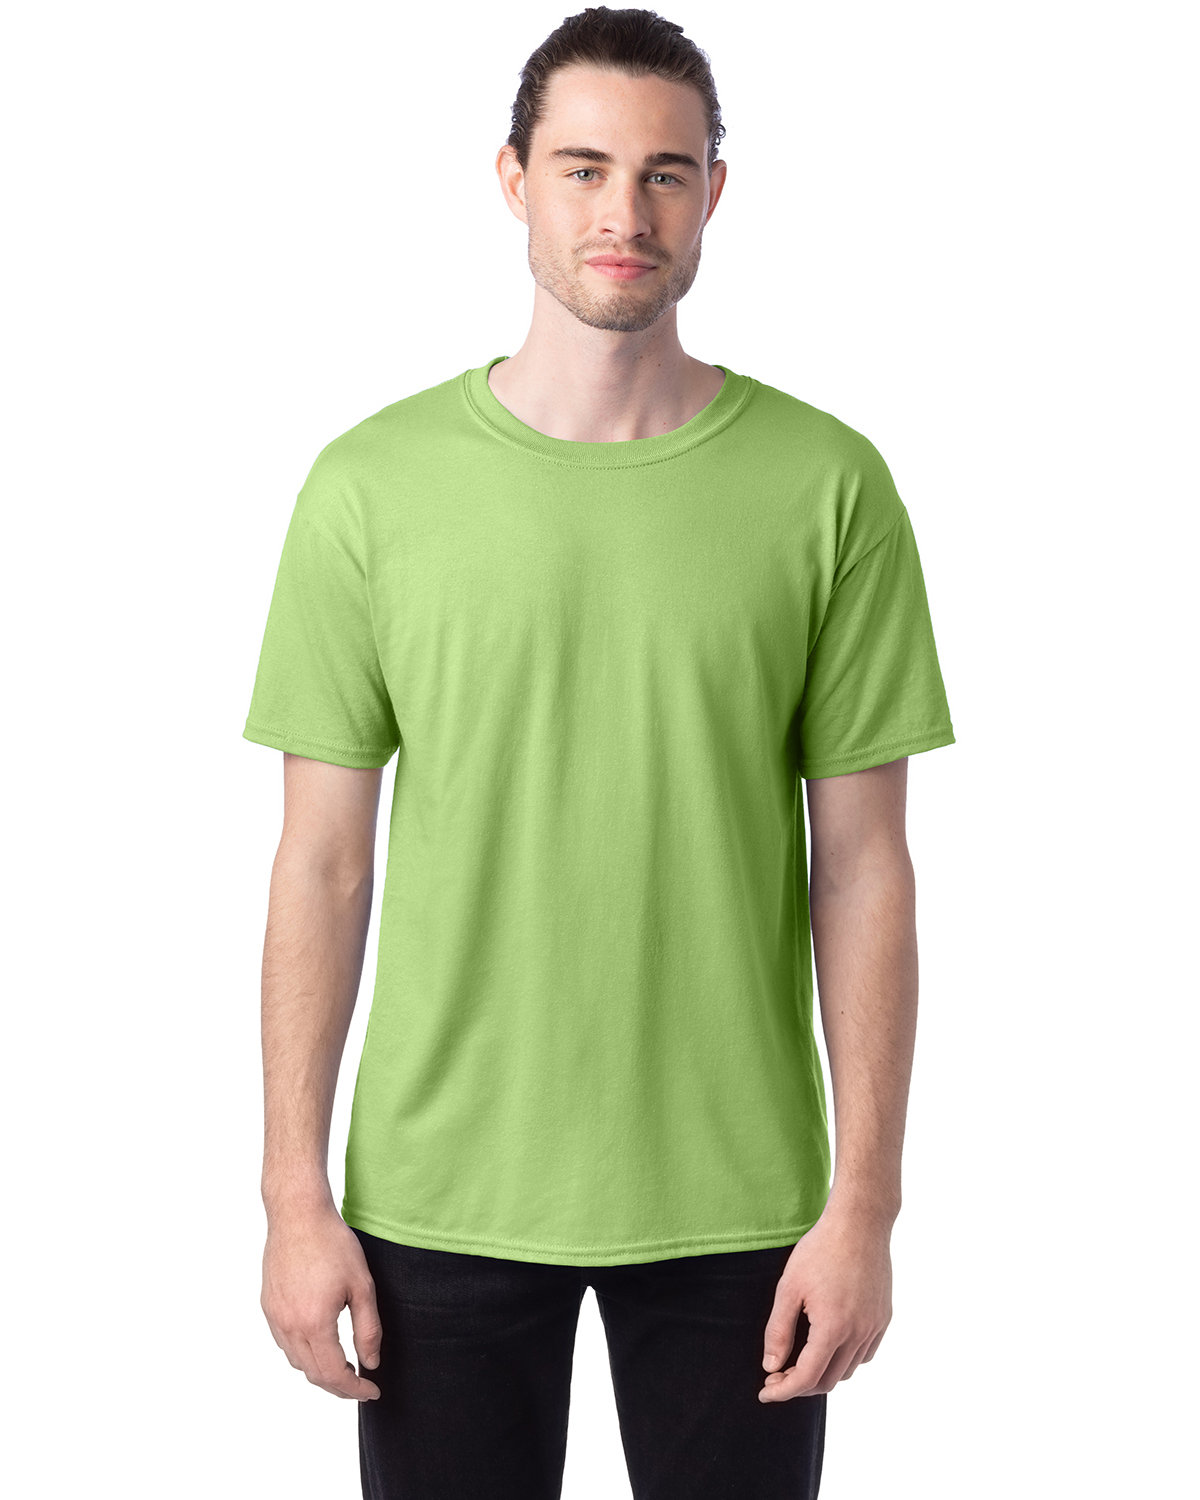 Hanes Unisex 50/50 T-Shirt LIME 